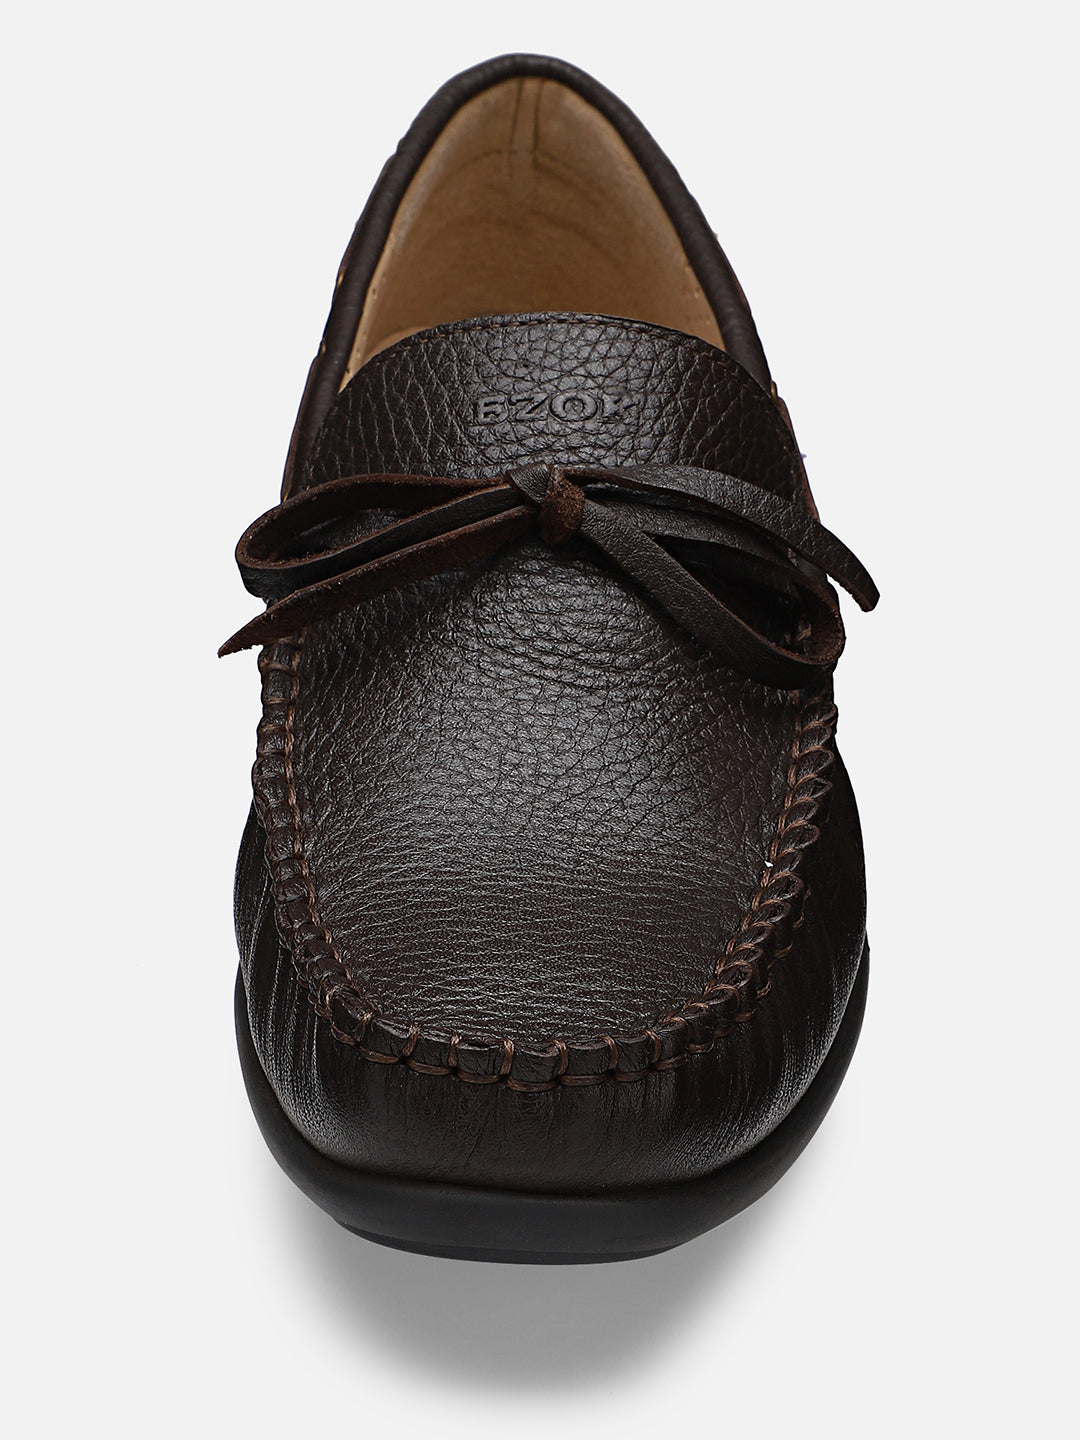 Ezok Men Moda 2060 Brown Leather Moccasin Shoes